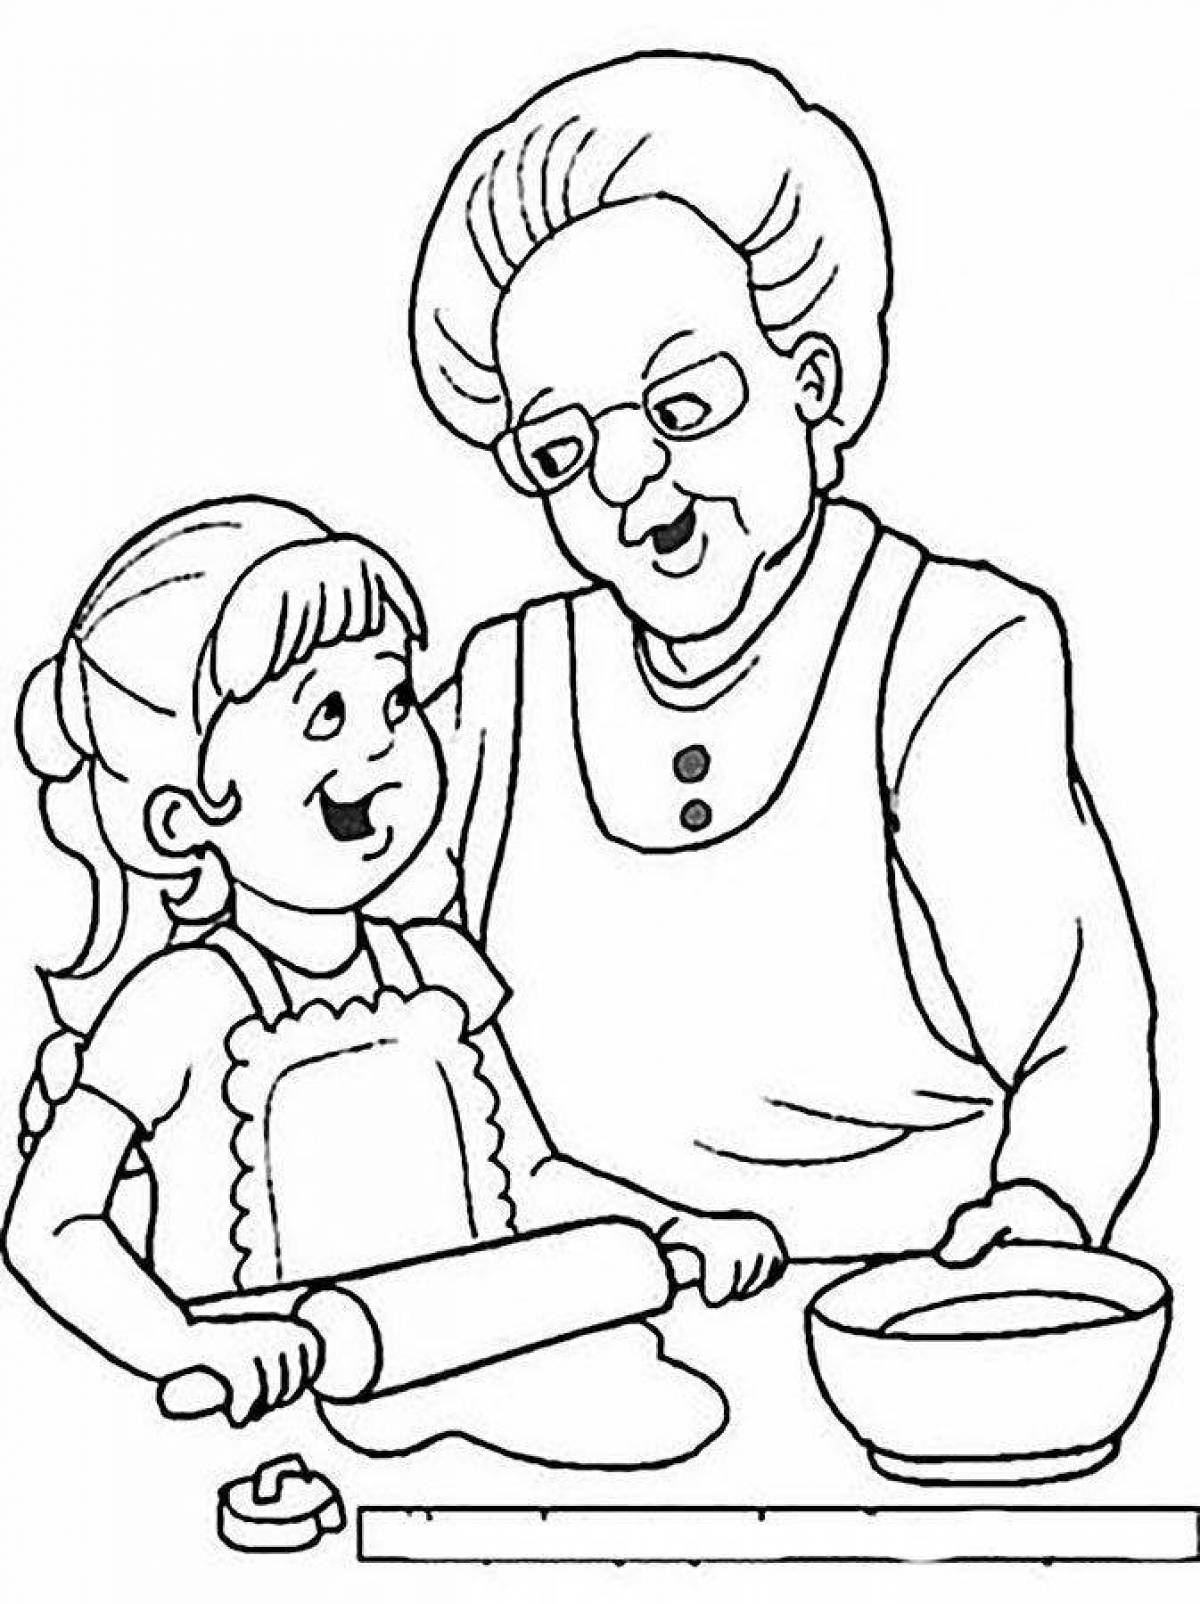 Coloring page adorable grandma and grandpa